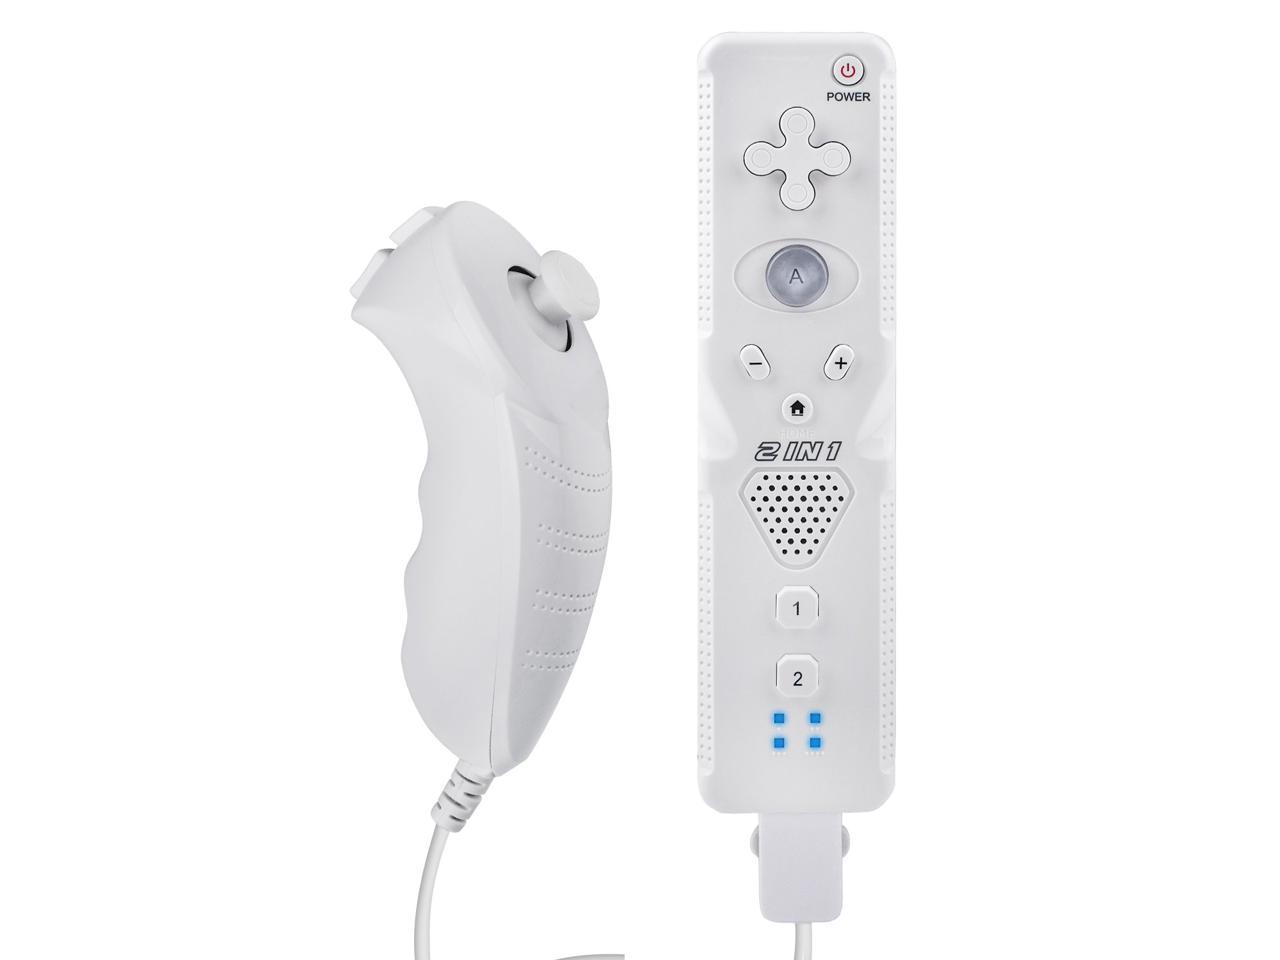 Dislocatie zelf oud Werleo Wii Remote with Wii Motion Plus Inside | Shock Wii Nunchuk  Controller Compatible Nintendo Wii / Wii U - Newegg.com